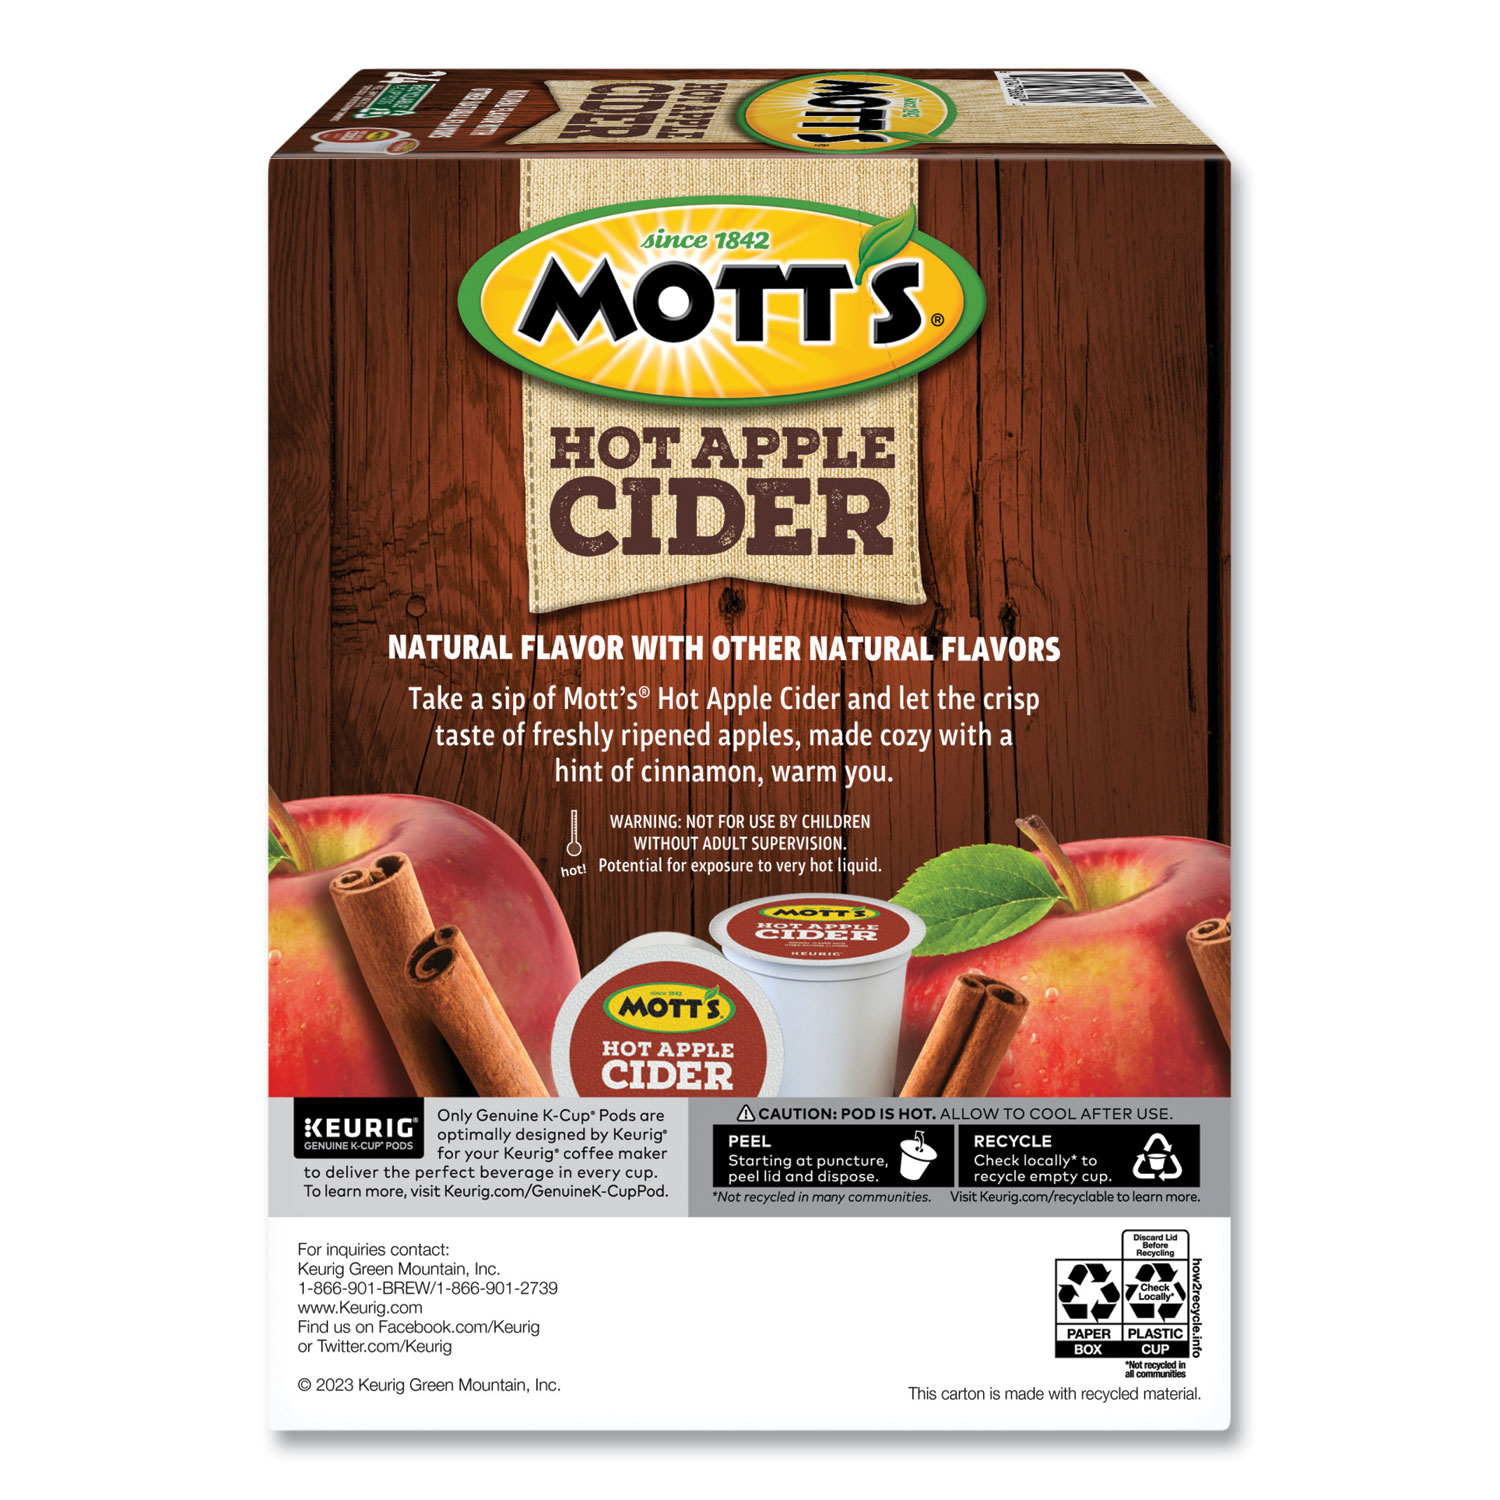 Motts Hot Apple Cider